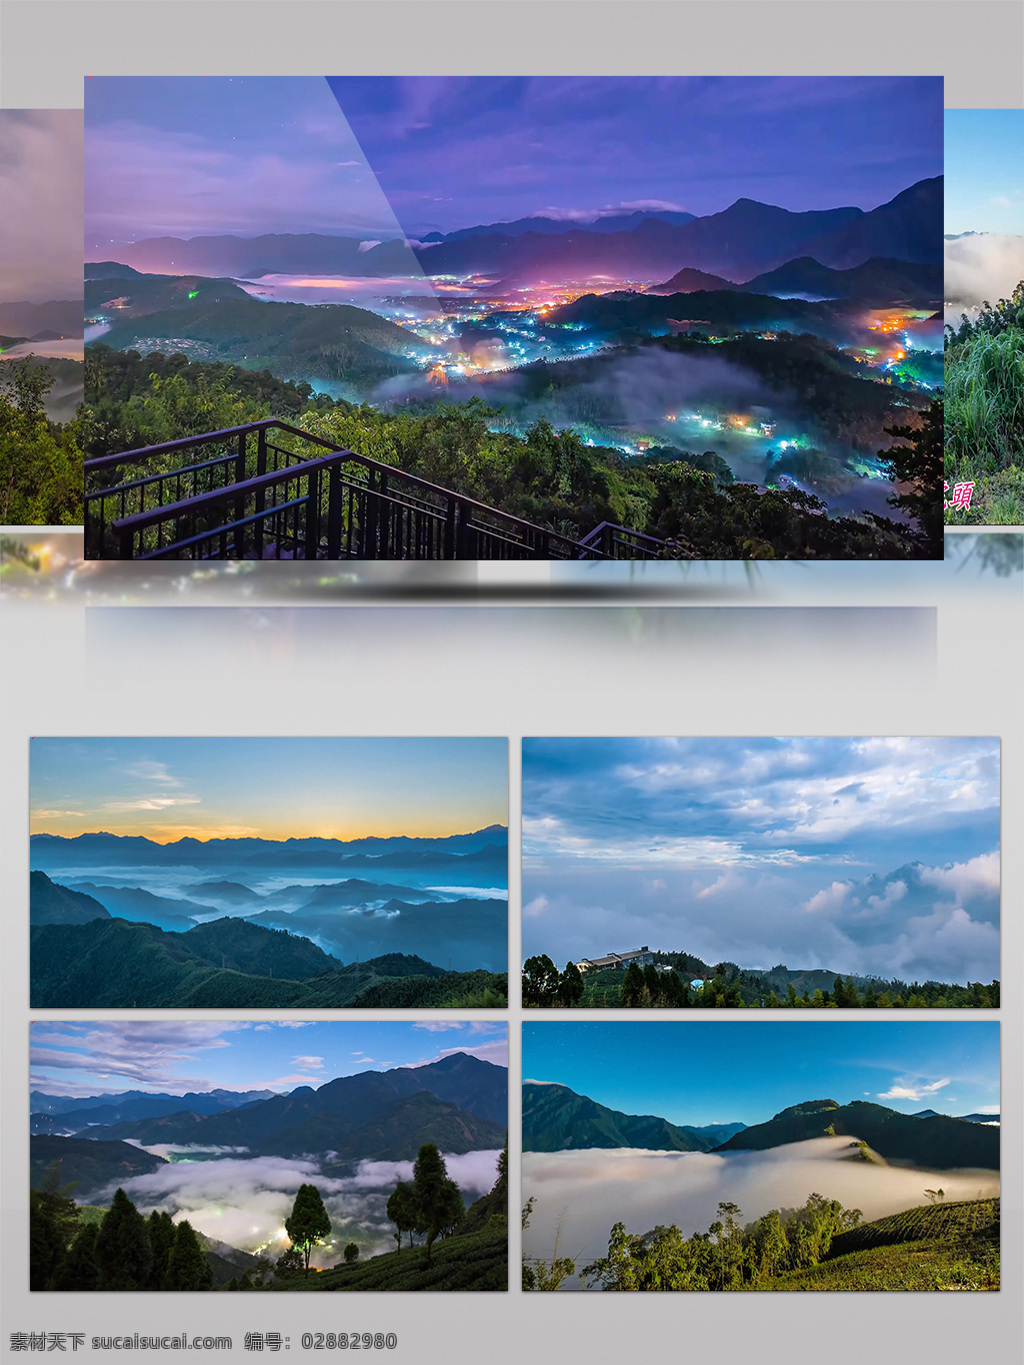 4k 大 美 中国台湾 云海 拼图 唯美 自然风光 夜景 灯光 山峰 大美 中国 台湾 自然 风光 霞光 观景台